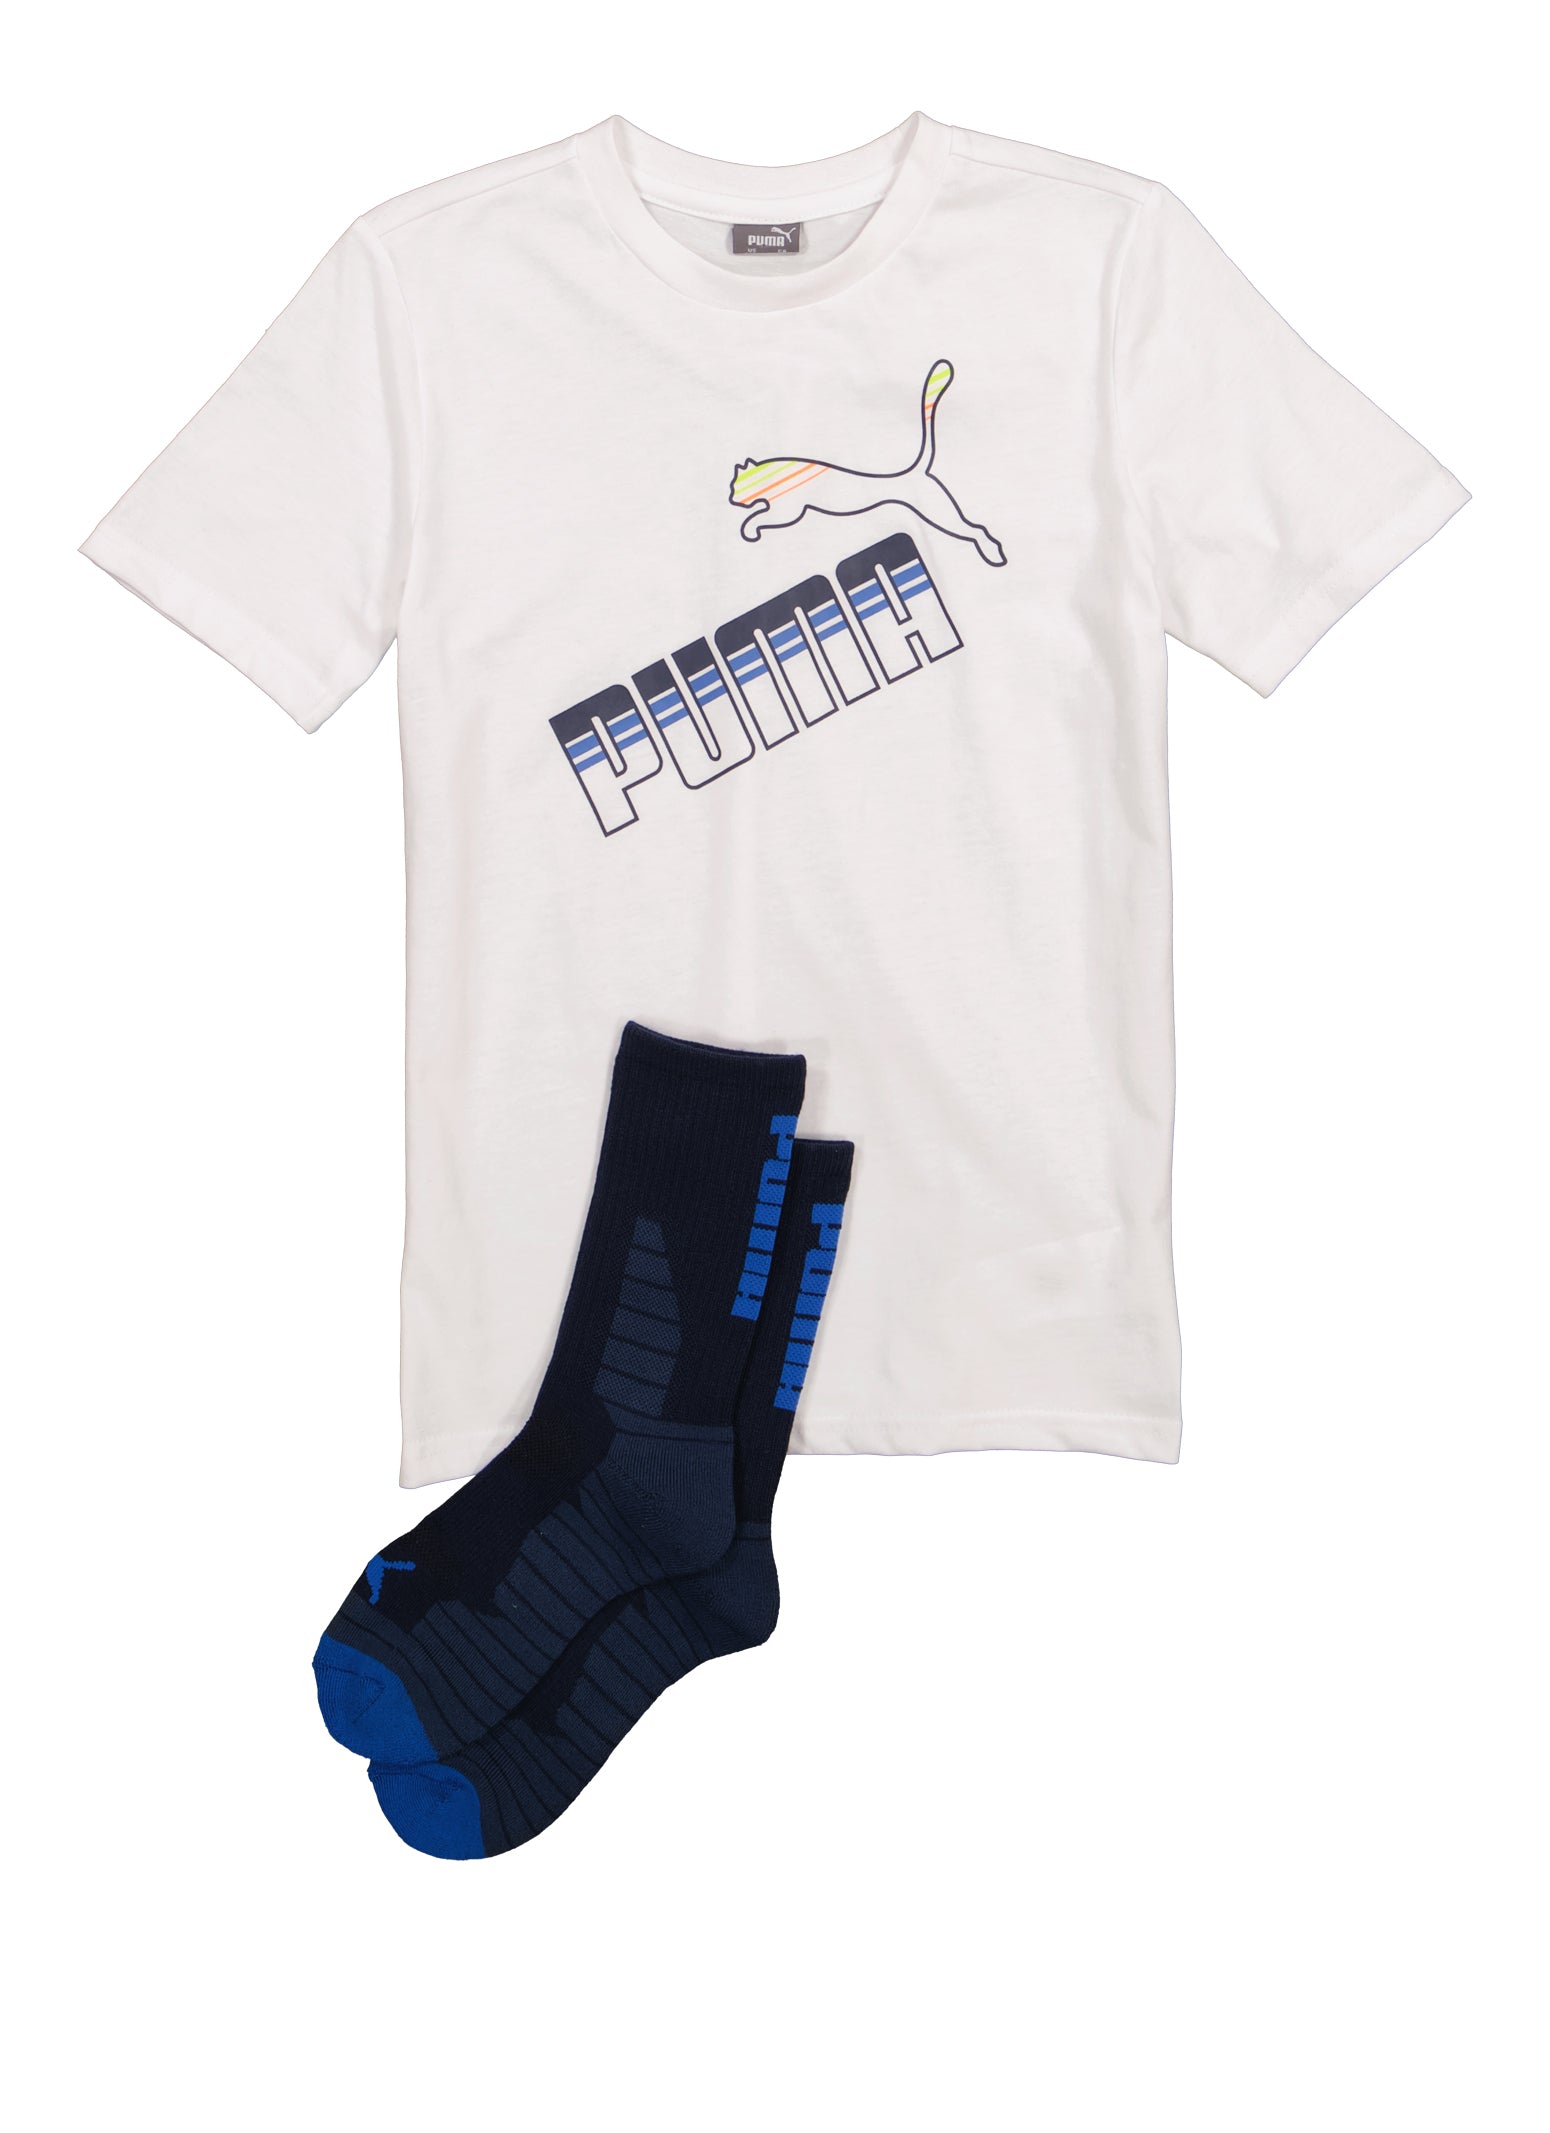 Boys Puma Striped Logo Graphic Tee and Socks, White, Size M